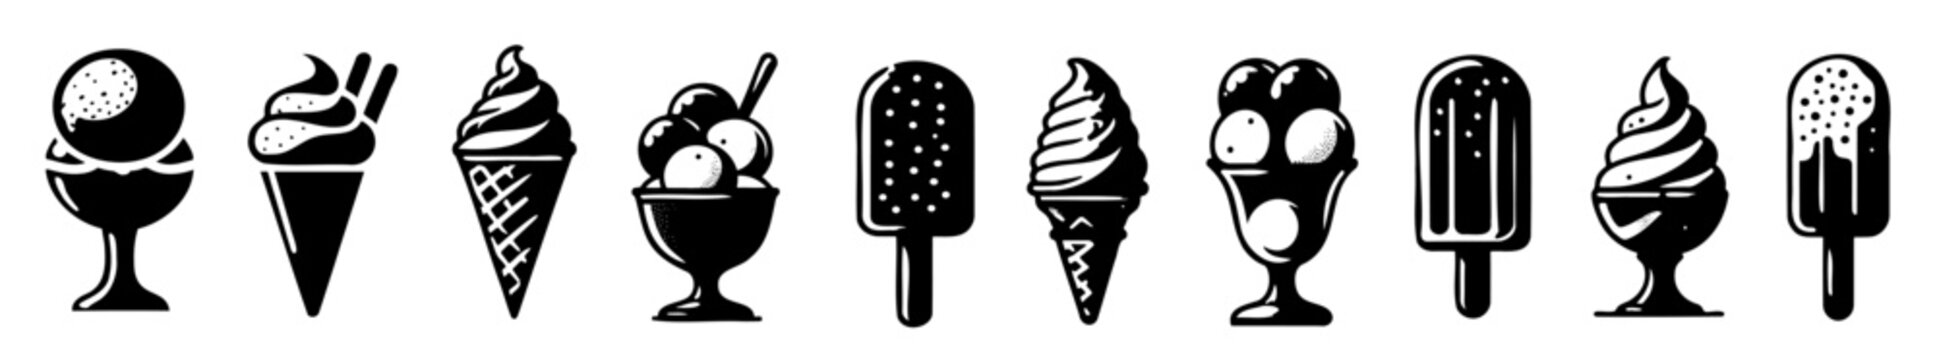 Sketch Ice cream icons frozen creamy desserts, gelato ice cream, wafer cone, caramel eskimo or chocolate glaze sundae whipped cream and fruit ice, fresh vanilla scoops